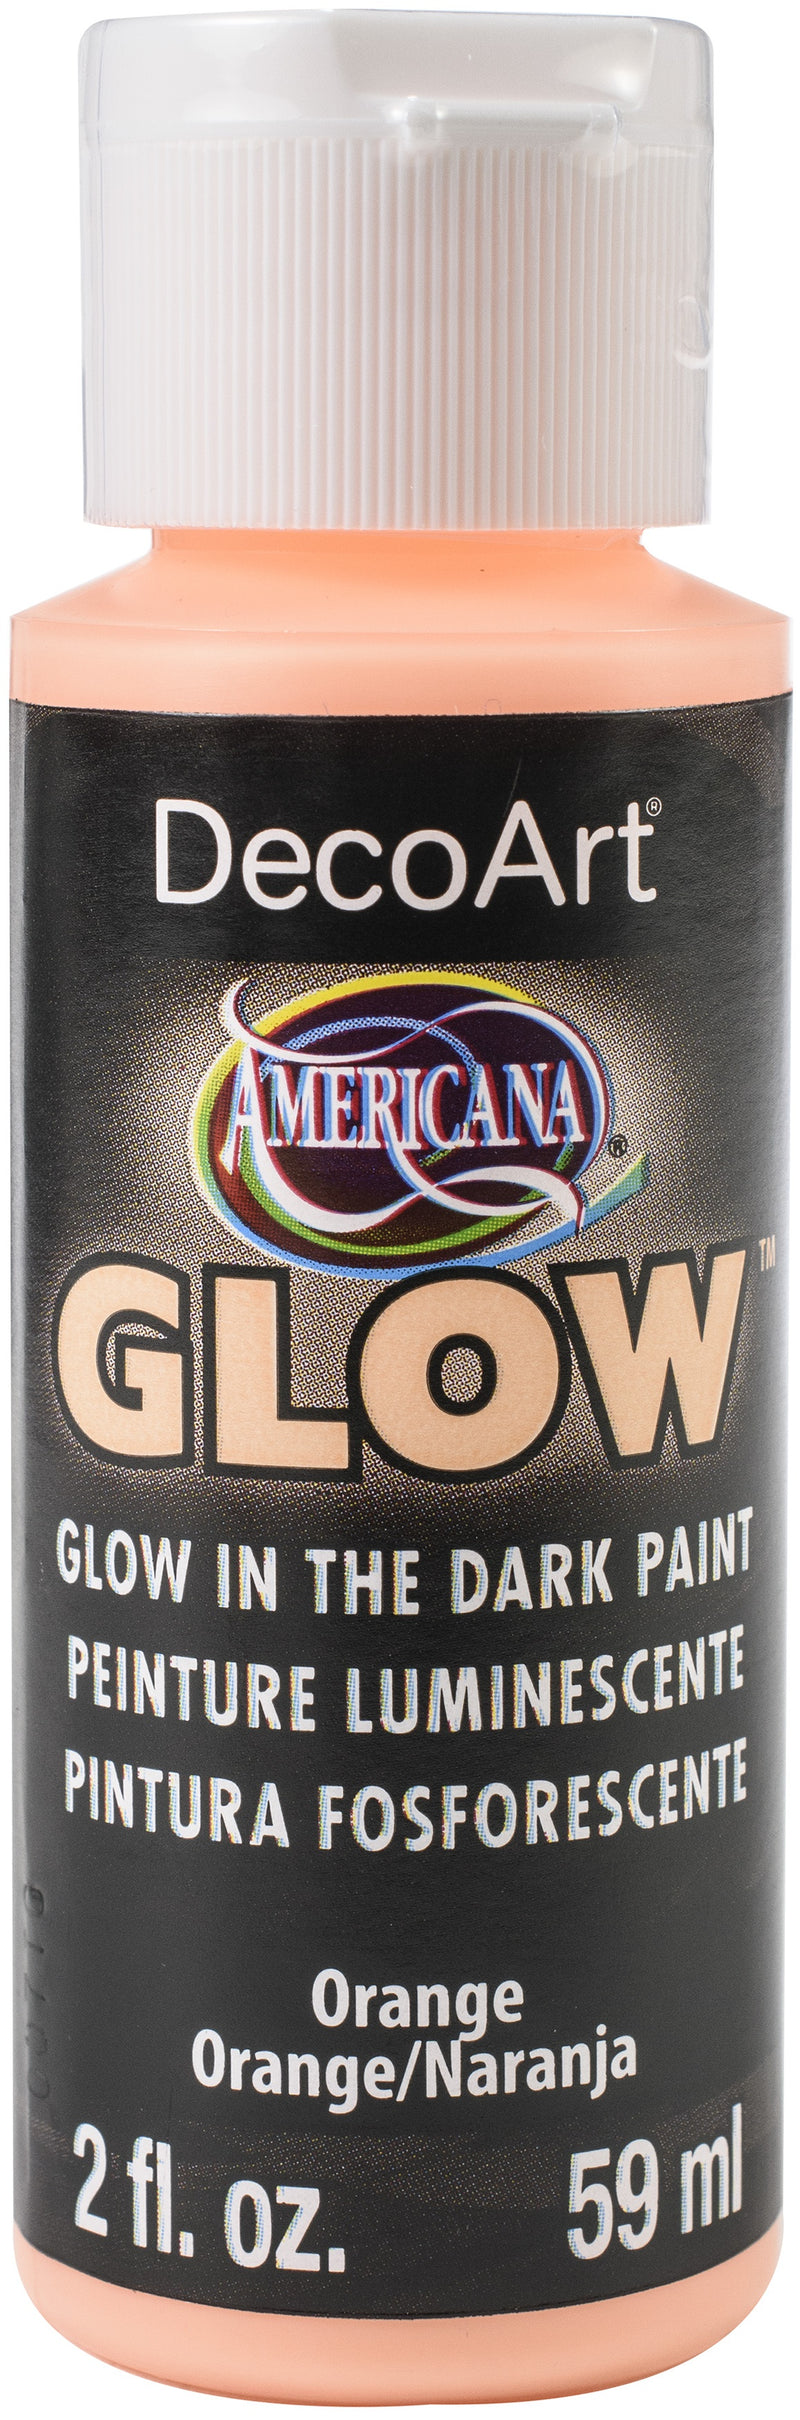 Decoart Americana Glow Paint 2oz